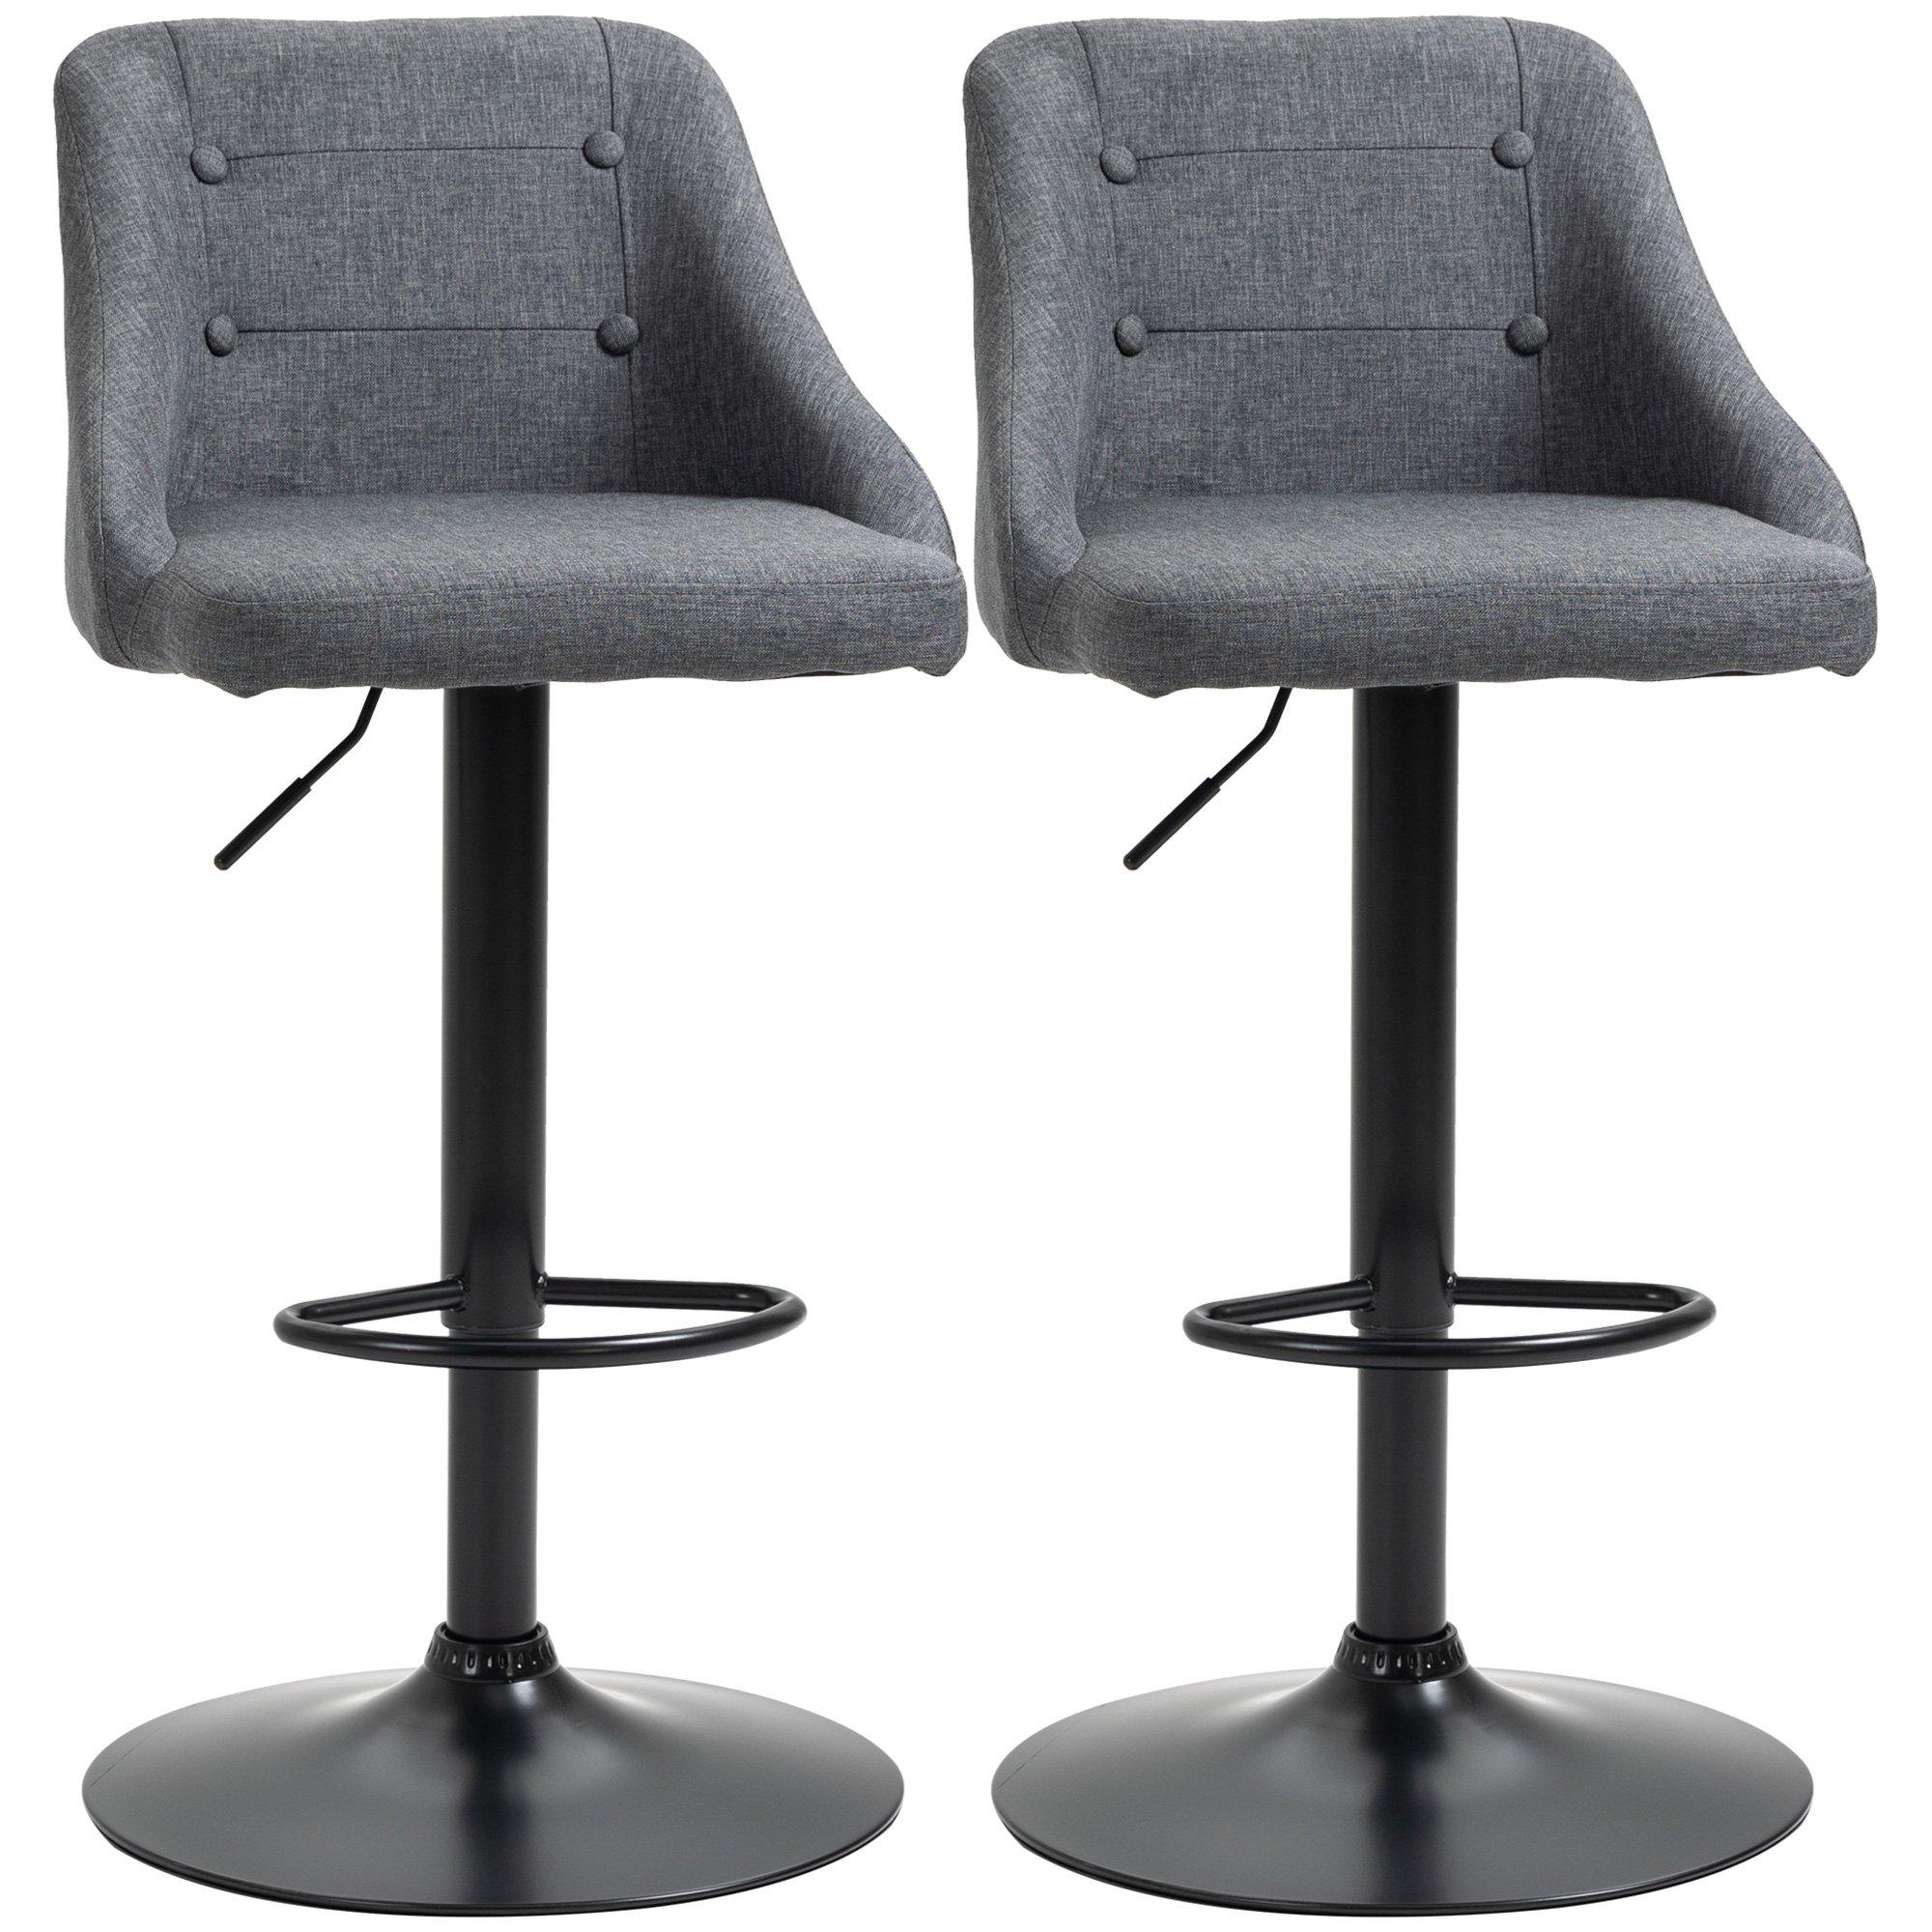 Modern Swivel Bar Stools Set of Adjustable Height Bar Chairs Footrest